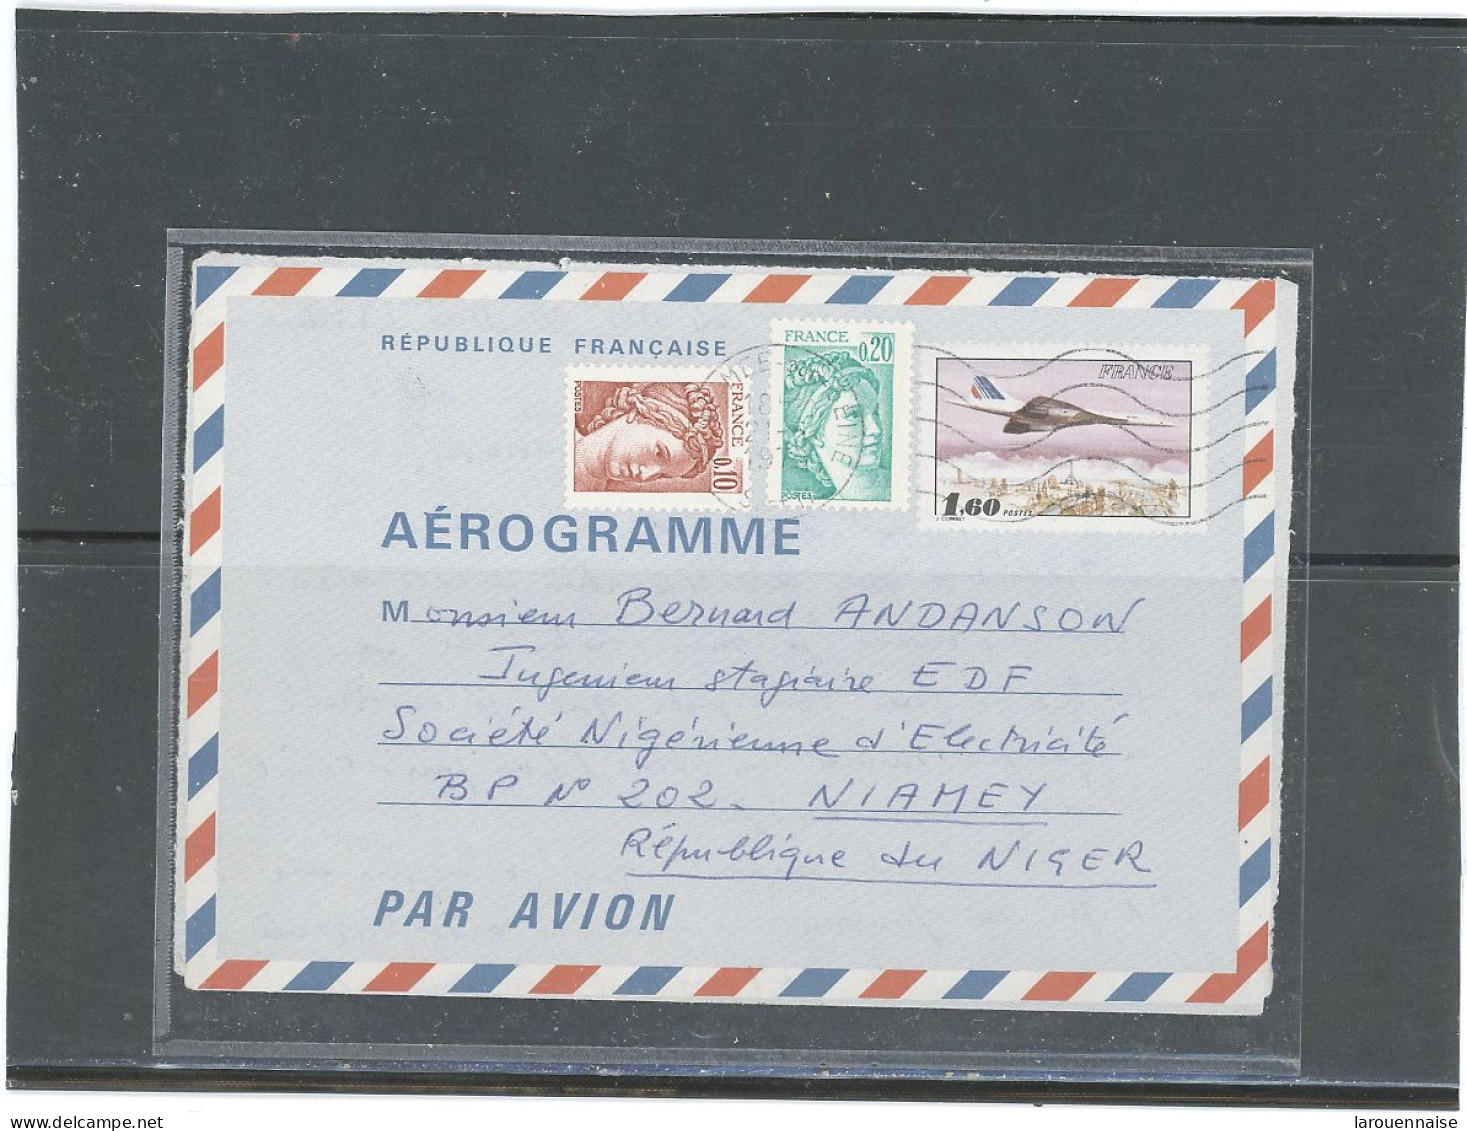 AEROGRAMME -N°1004 -AEF-+SABINE 0,10 +0,20 COMPLÉMENT NOUVEAU TARIF (1,90) DESTINATION NIGER - Aerogramme